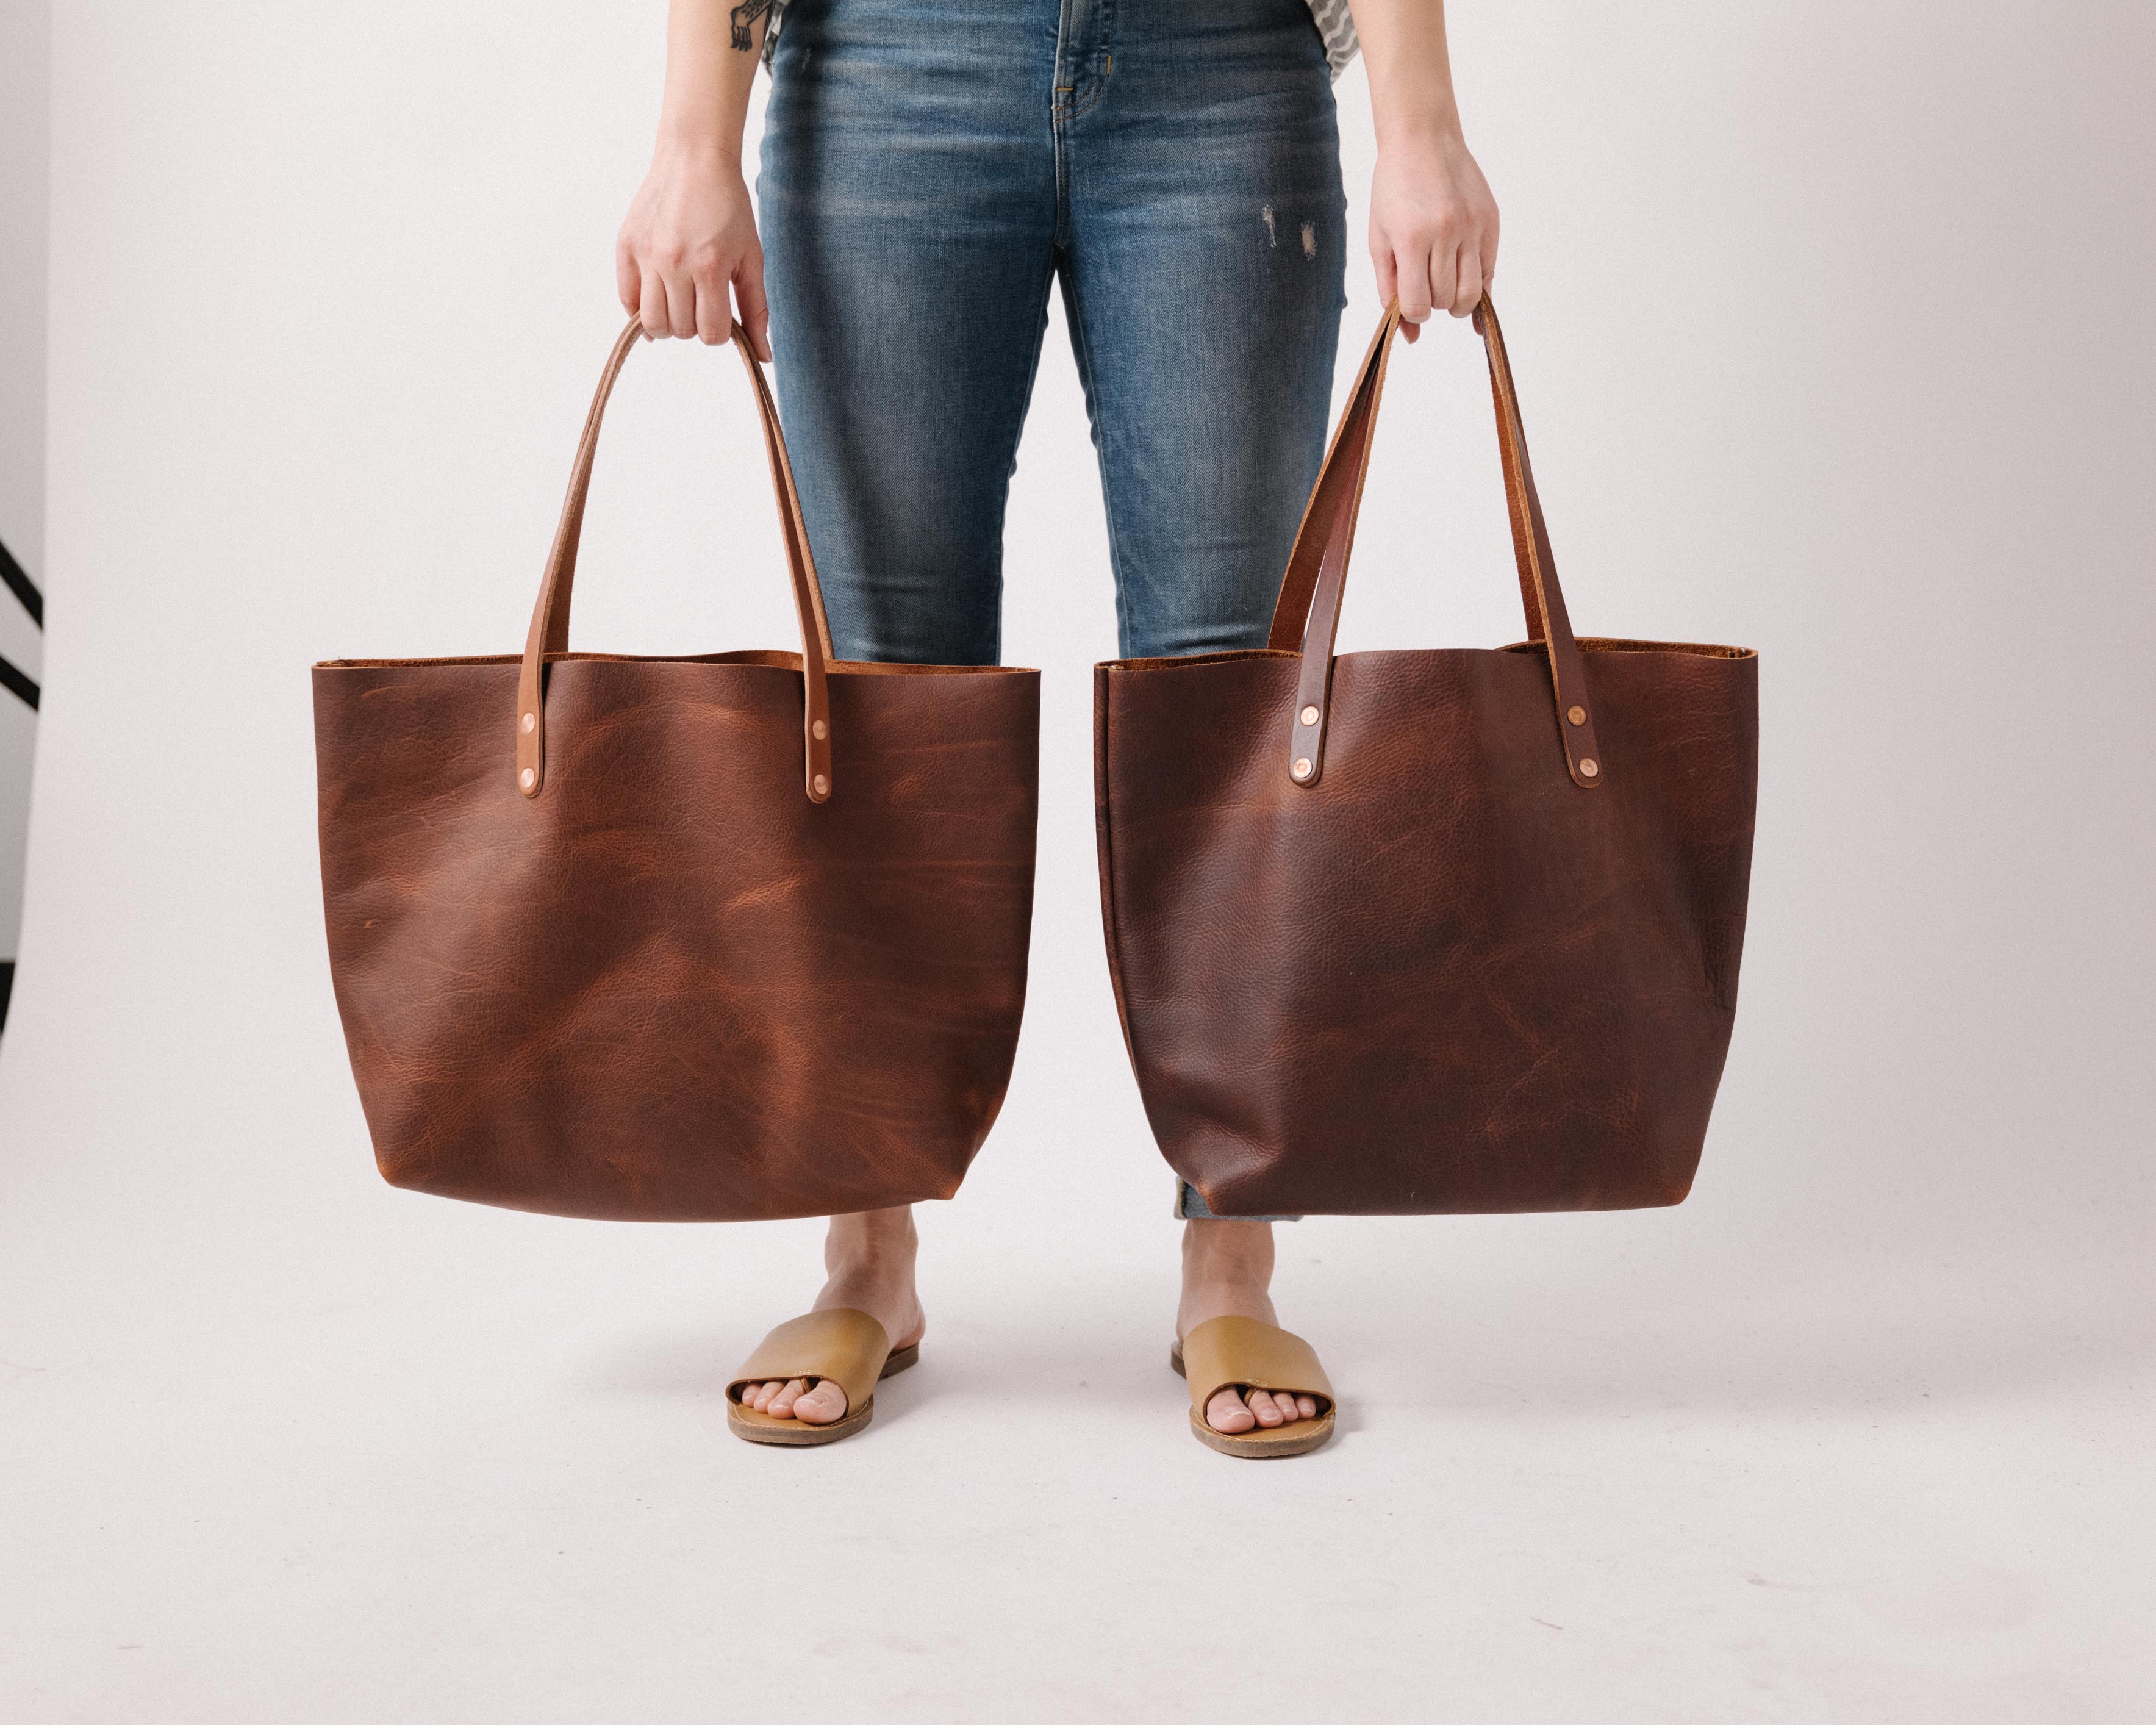 Style & Co Metallic Handbag - Trendy and Organized